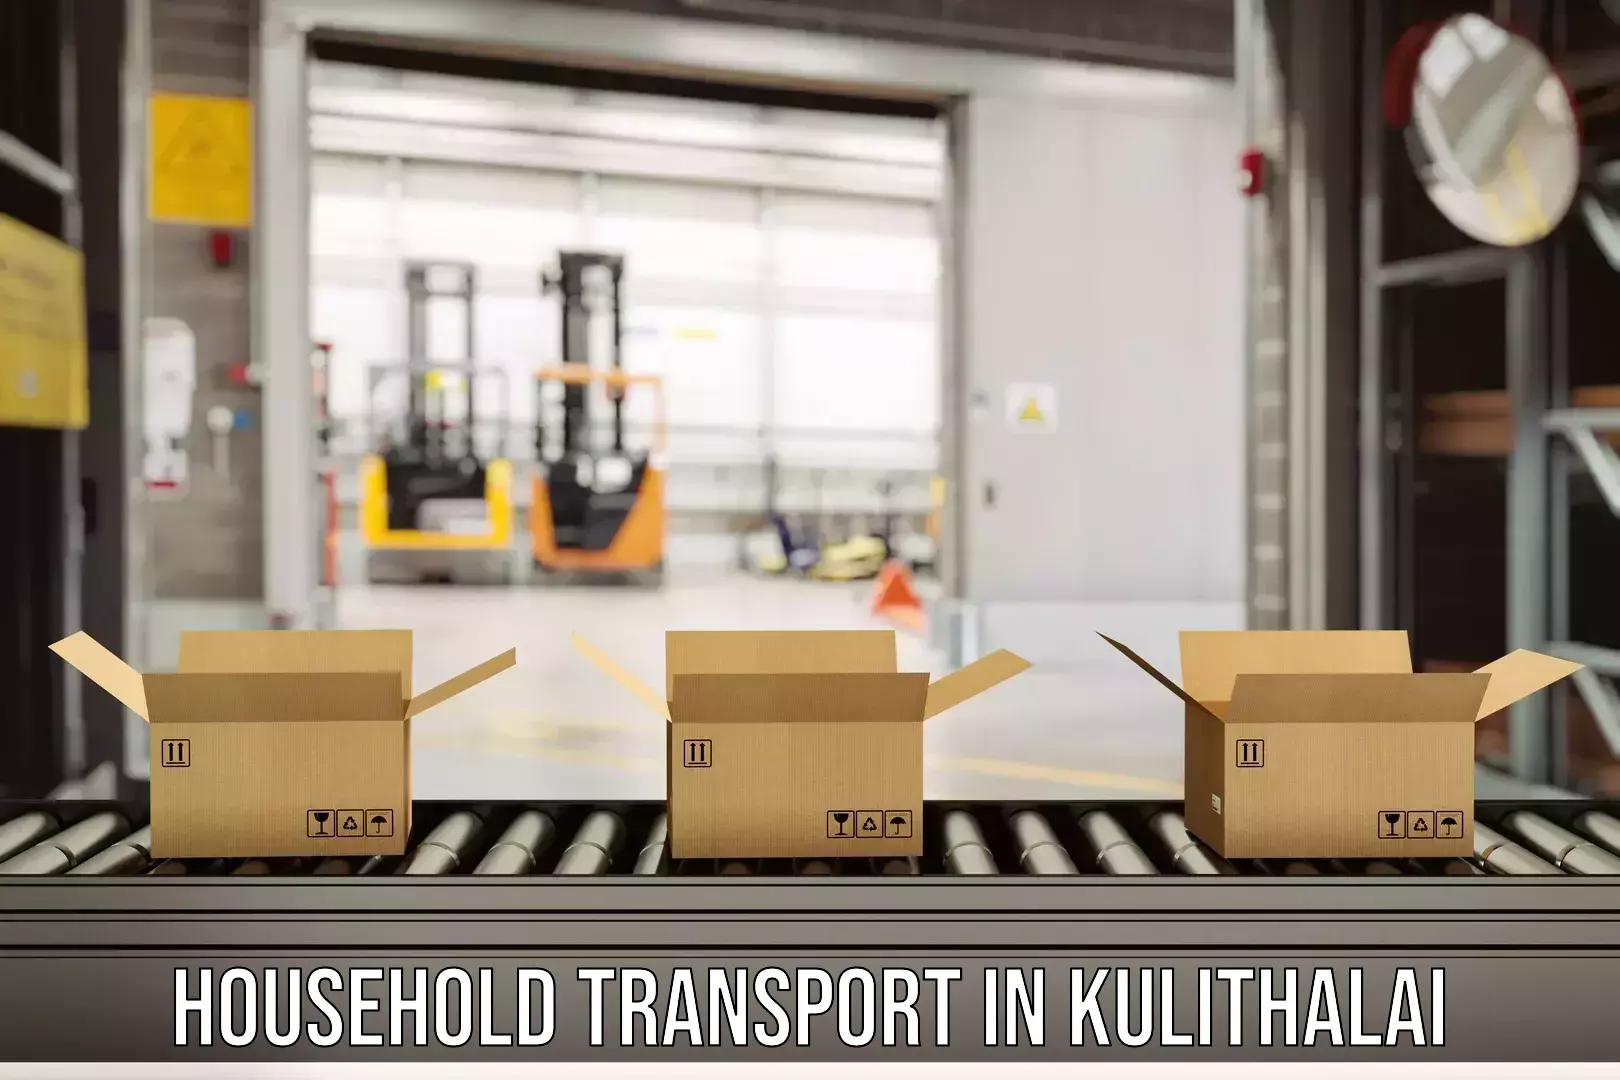 Household transport experts in Kulithalai